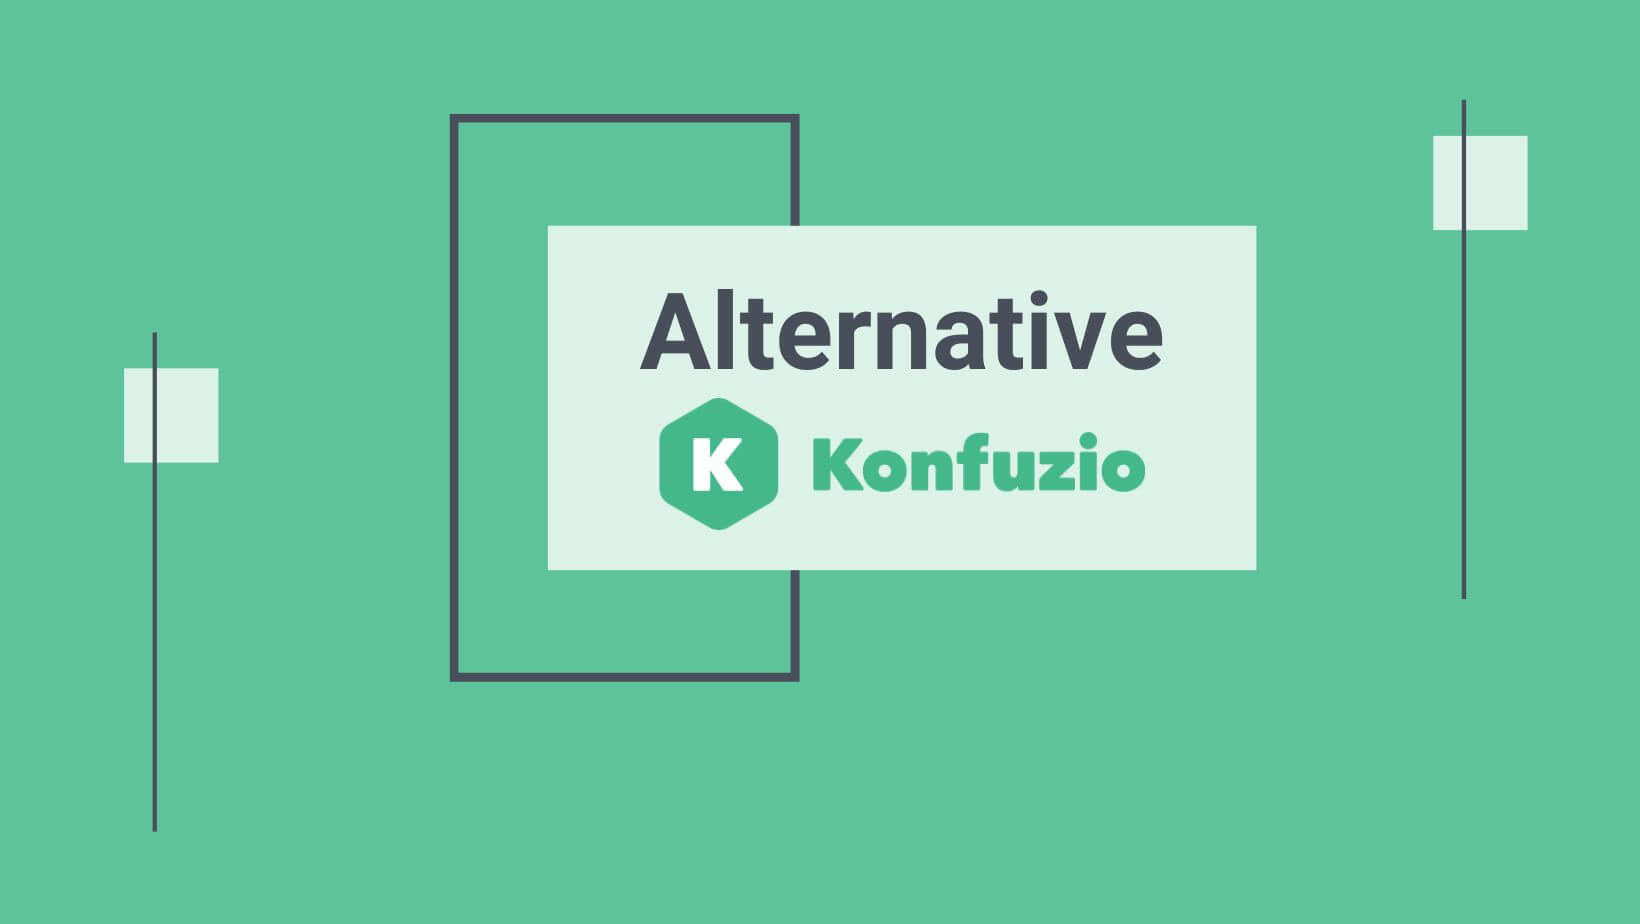 Konfuzio Logo sur fond vert, alternative